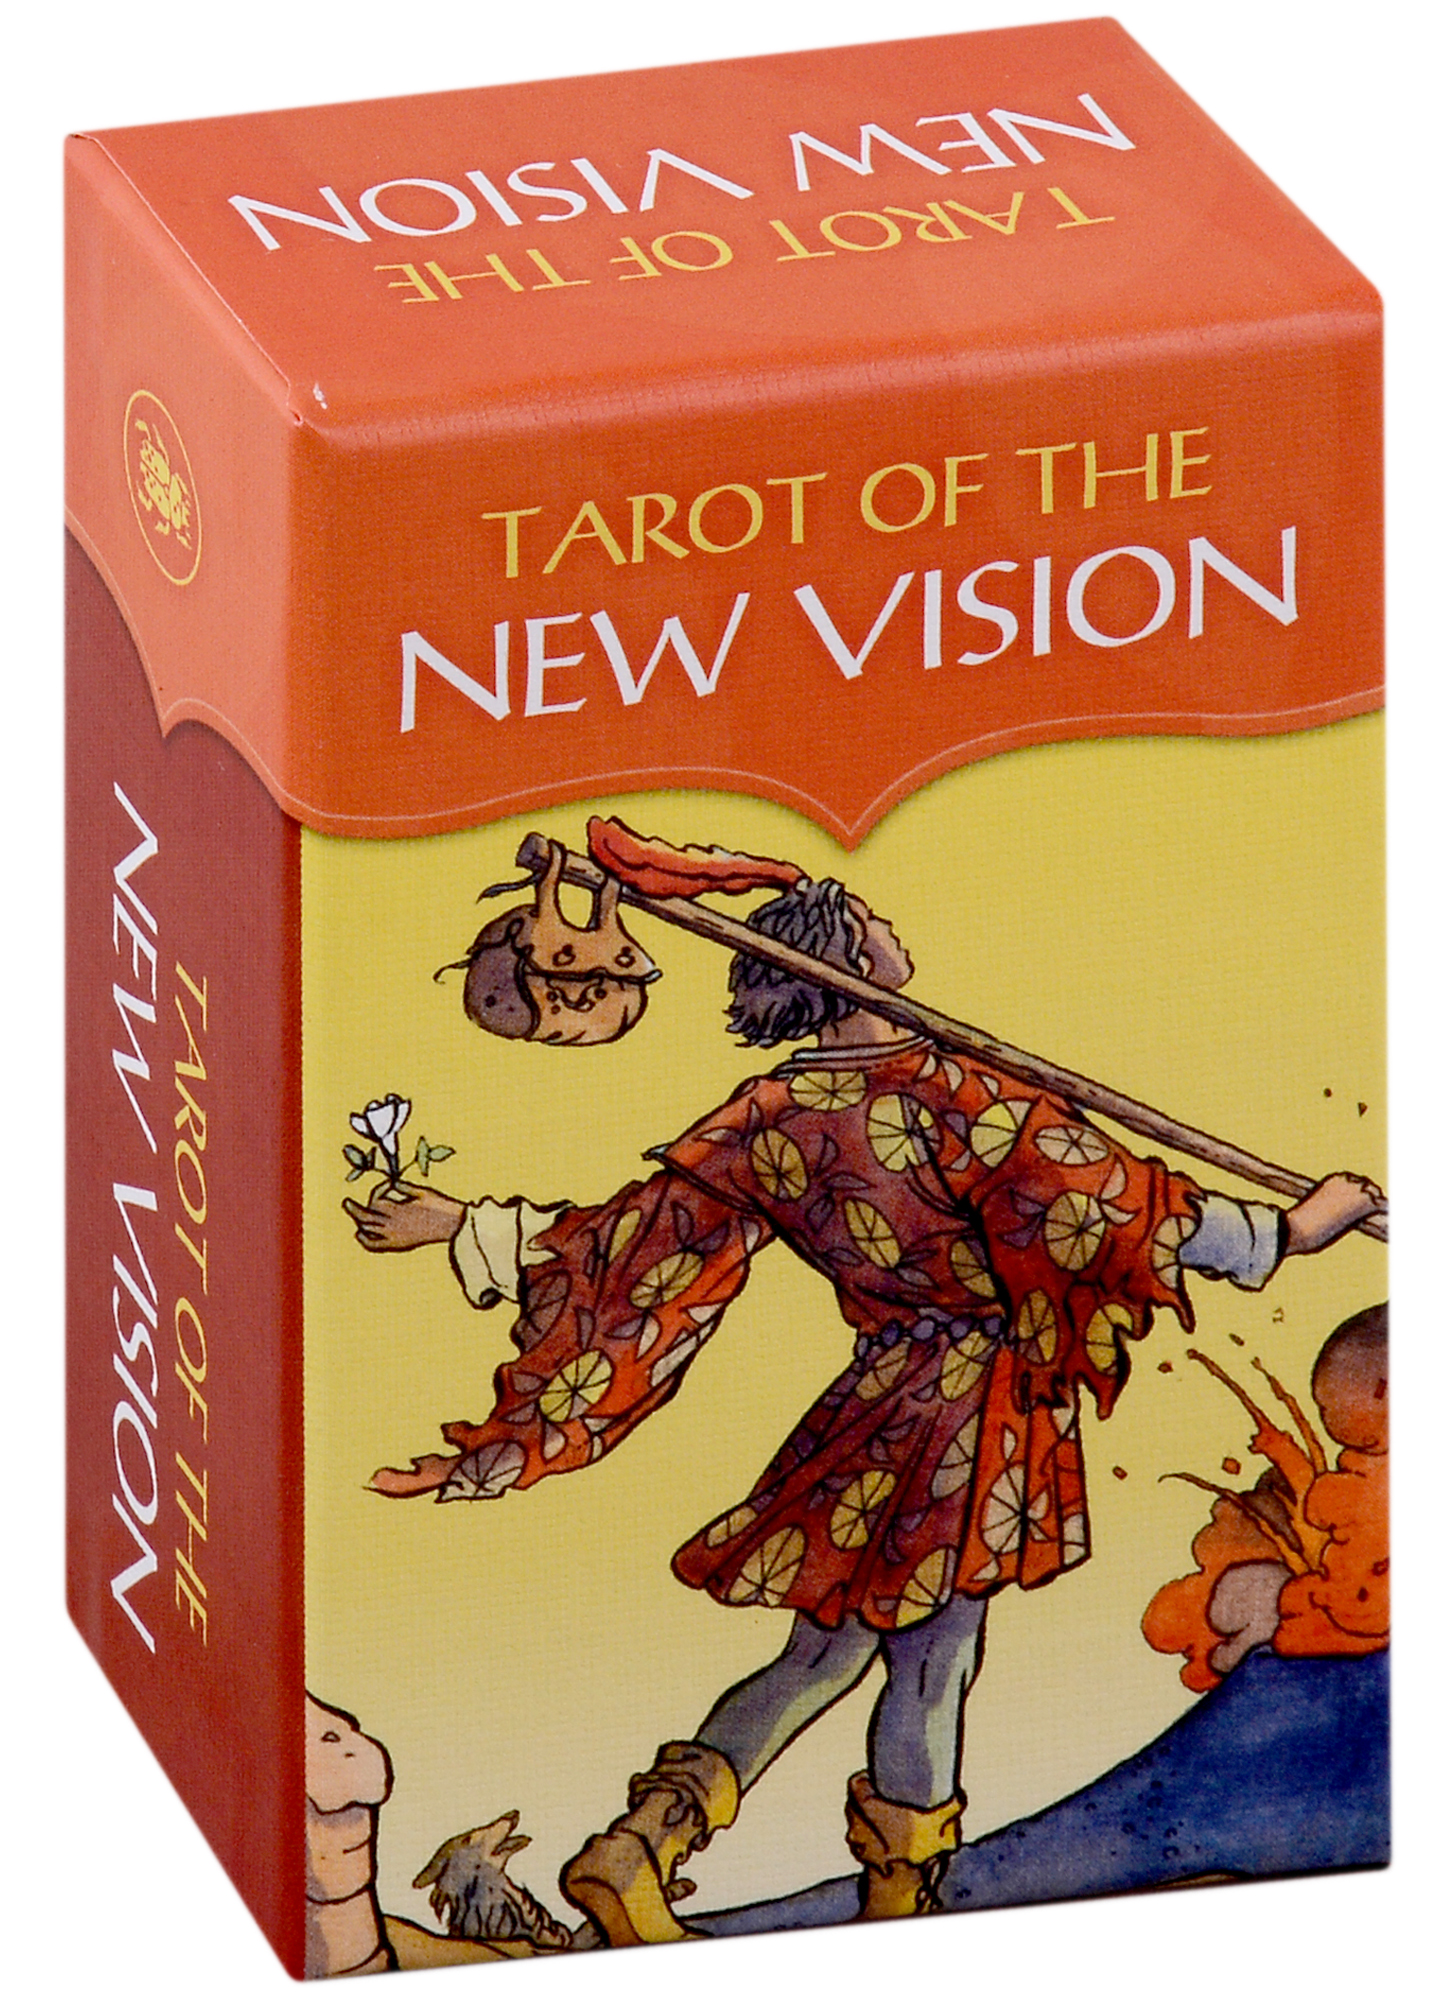 alligo p tarot of new vision 78 cards with instructions Alligo P. Tarot of New Vision (78 Cards with Instructions)